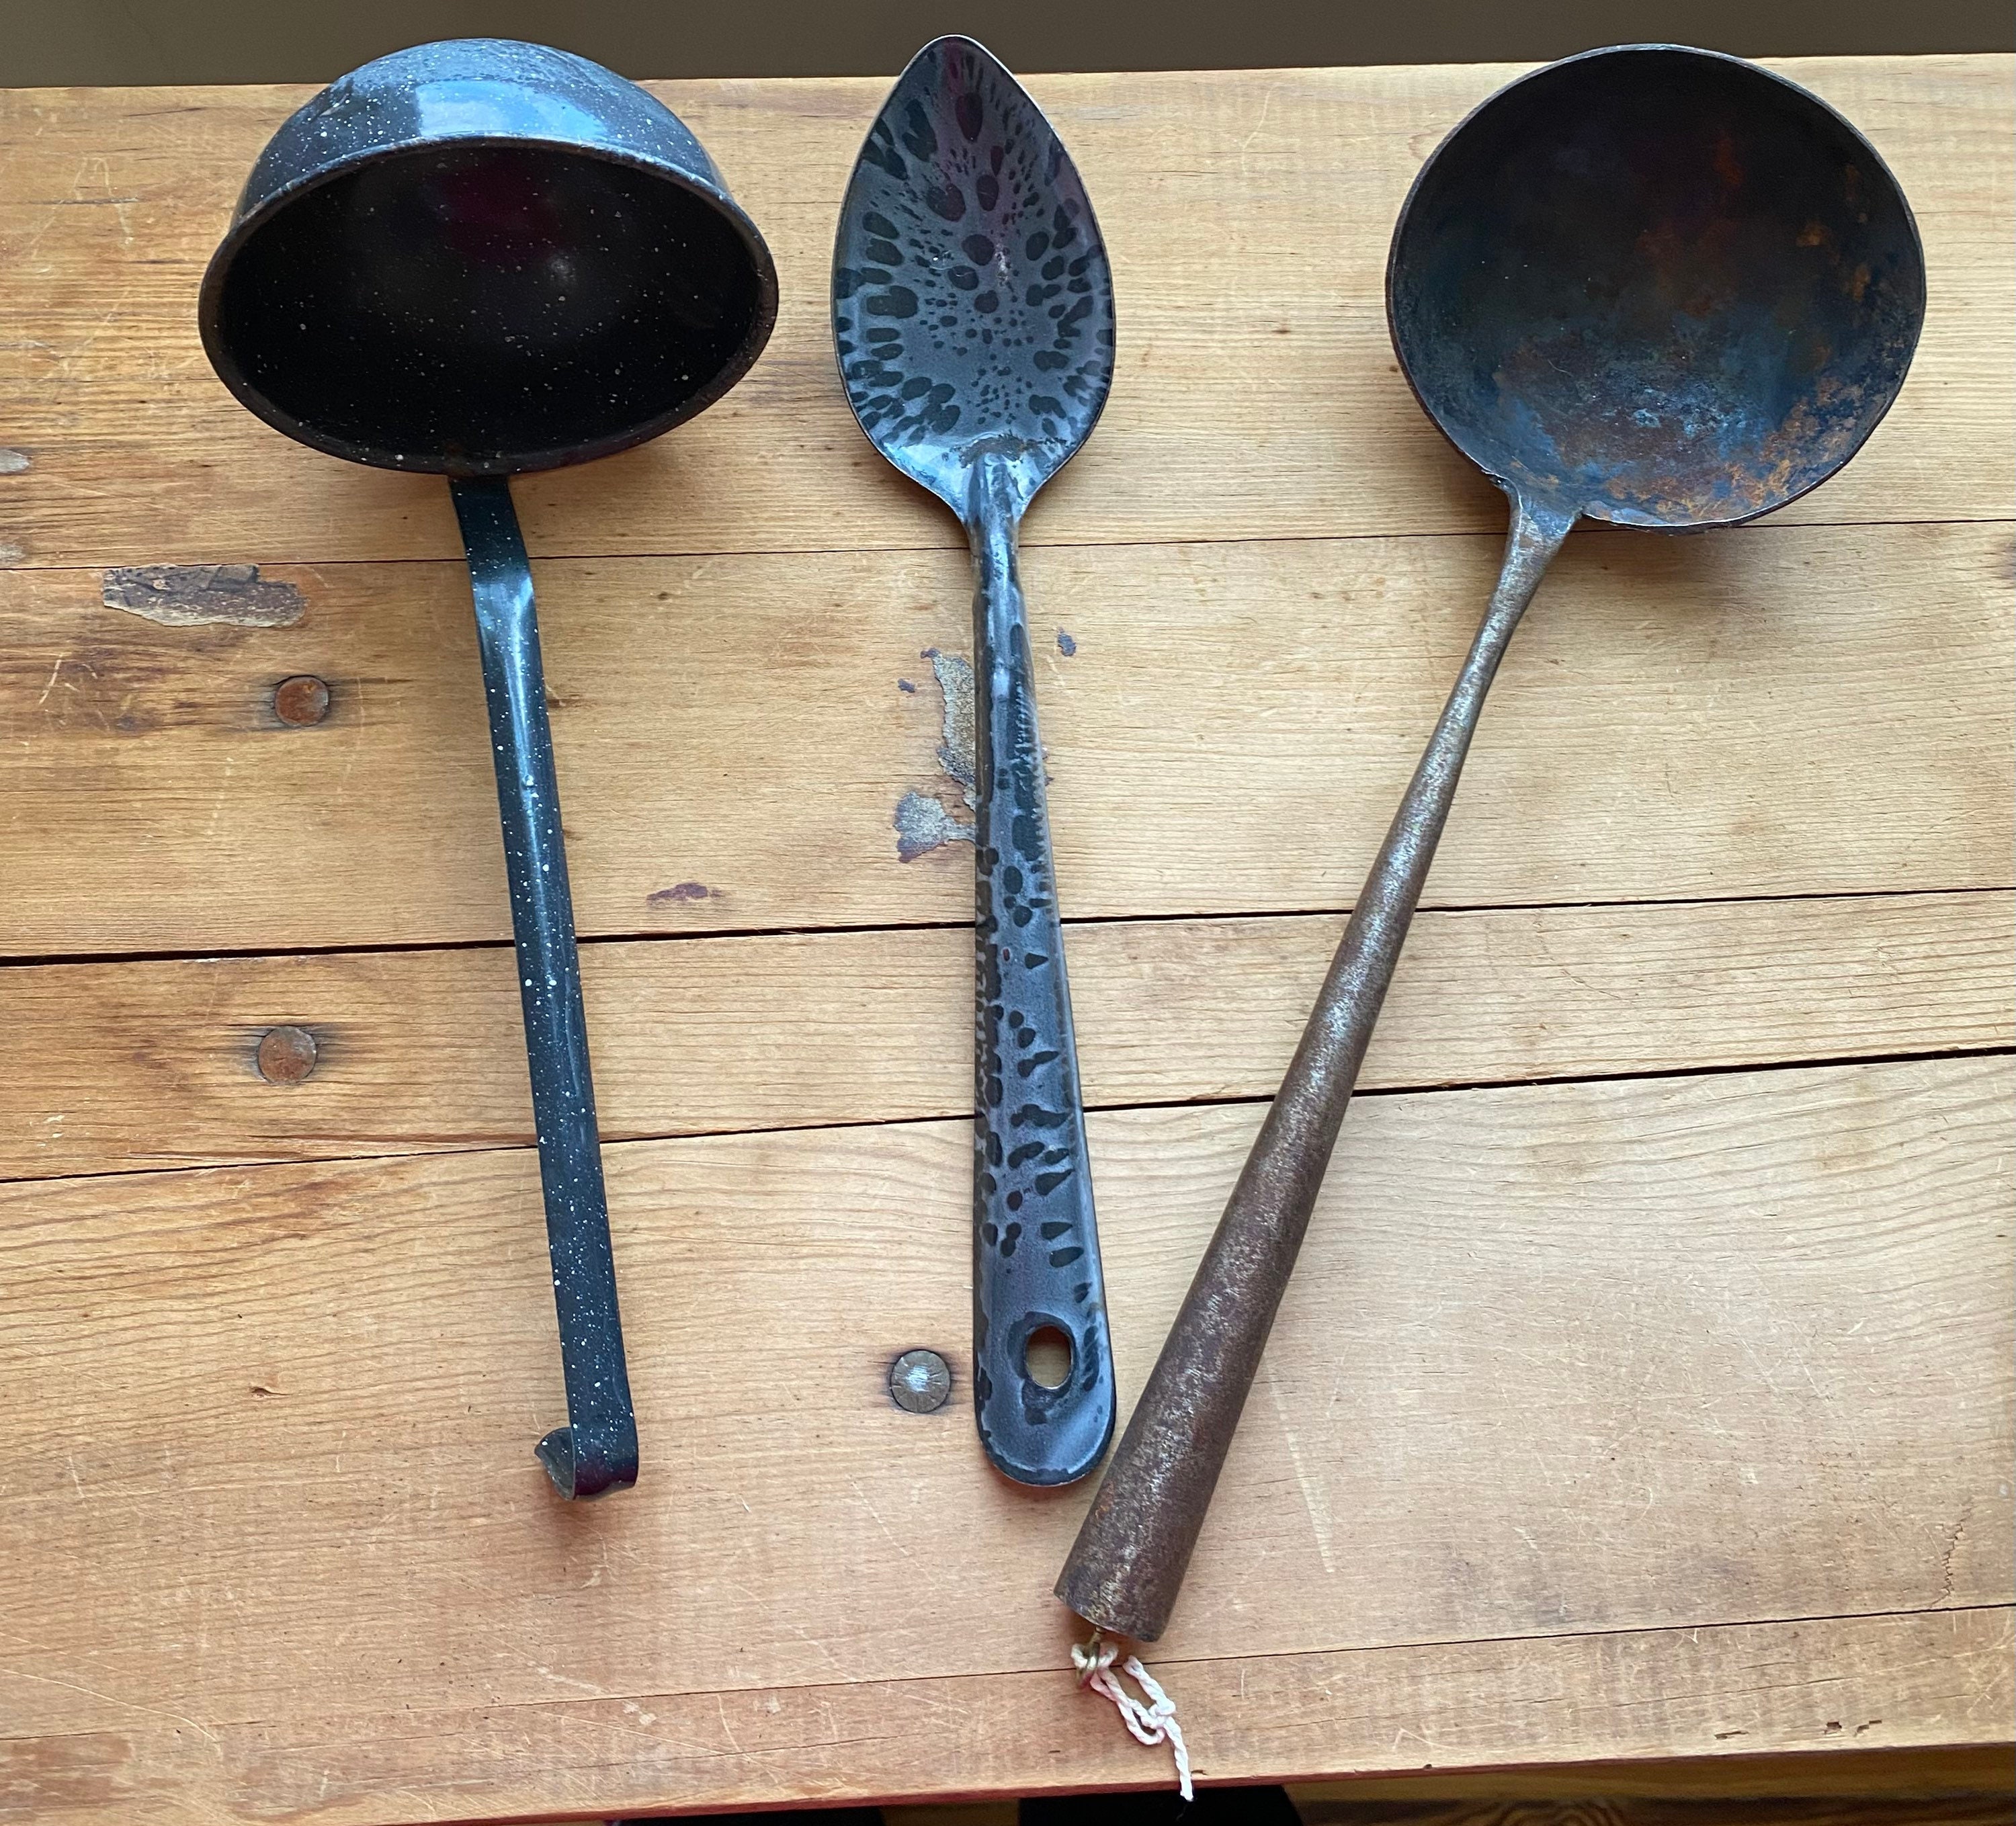 Vintage Cast Iron Utensil Set Fork, Spoon, Ladle And Strainer